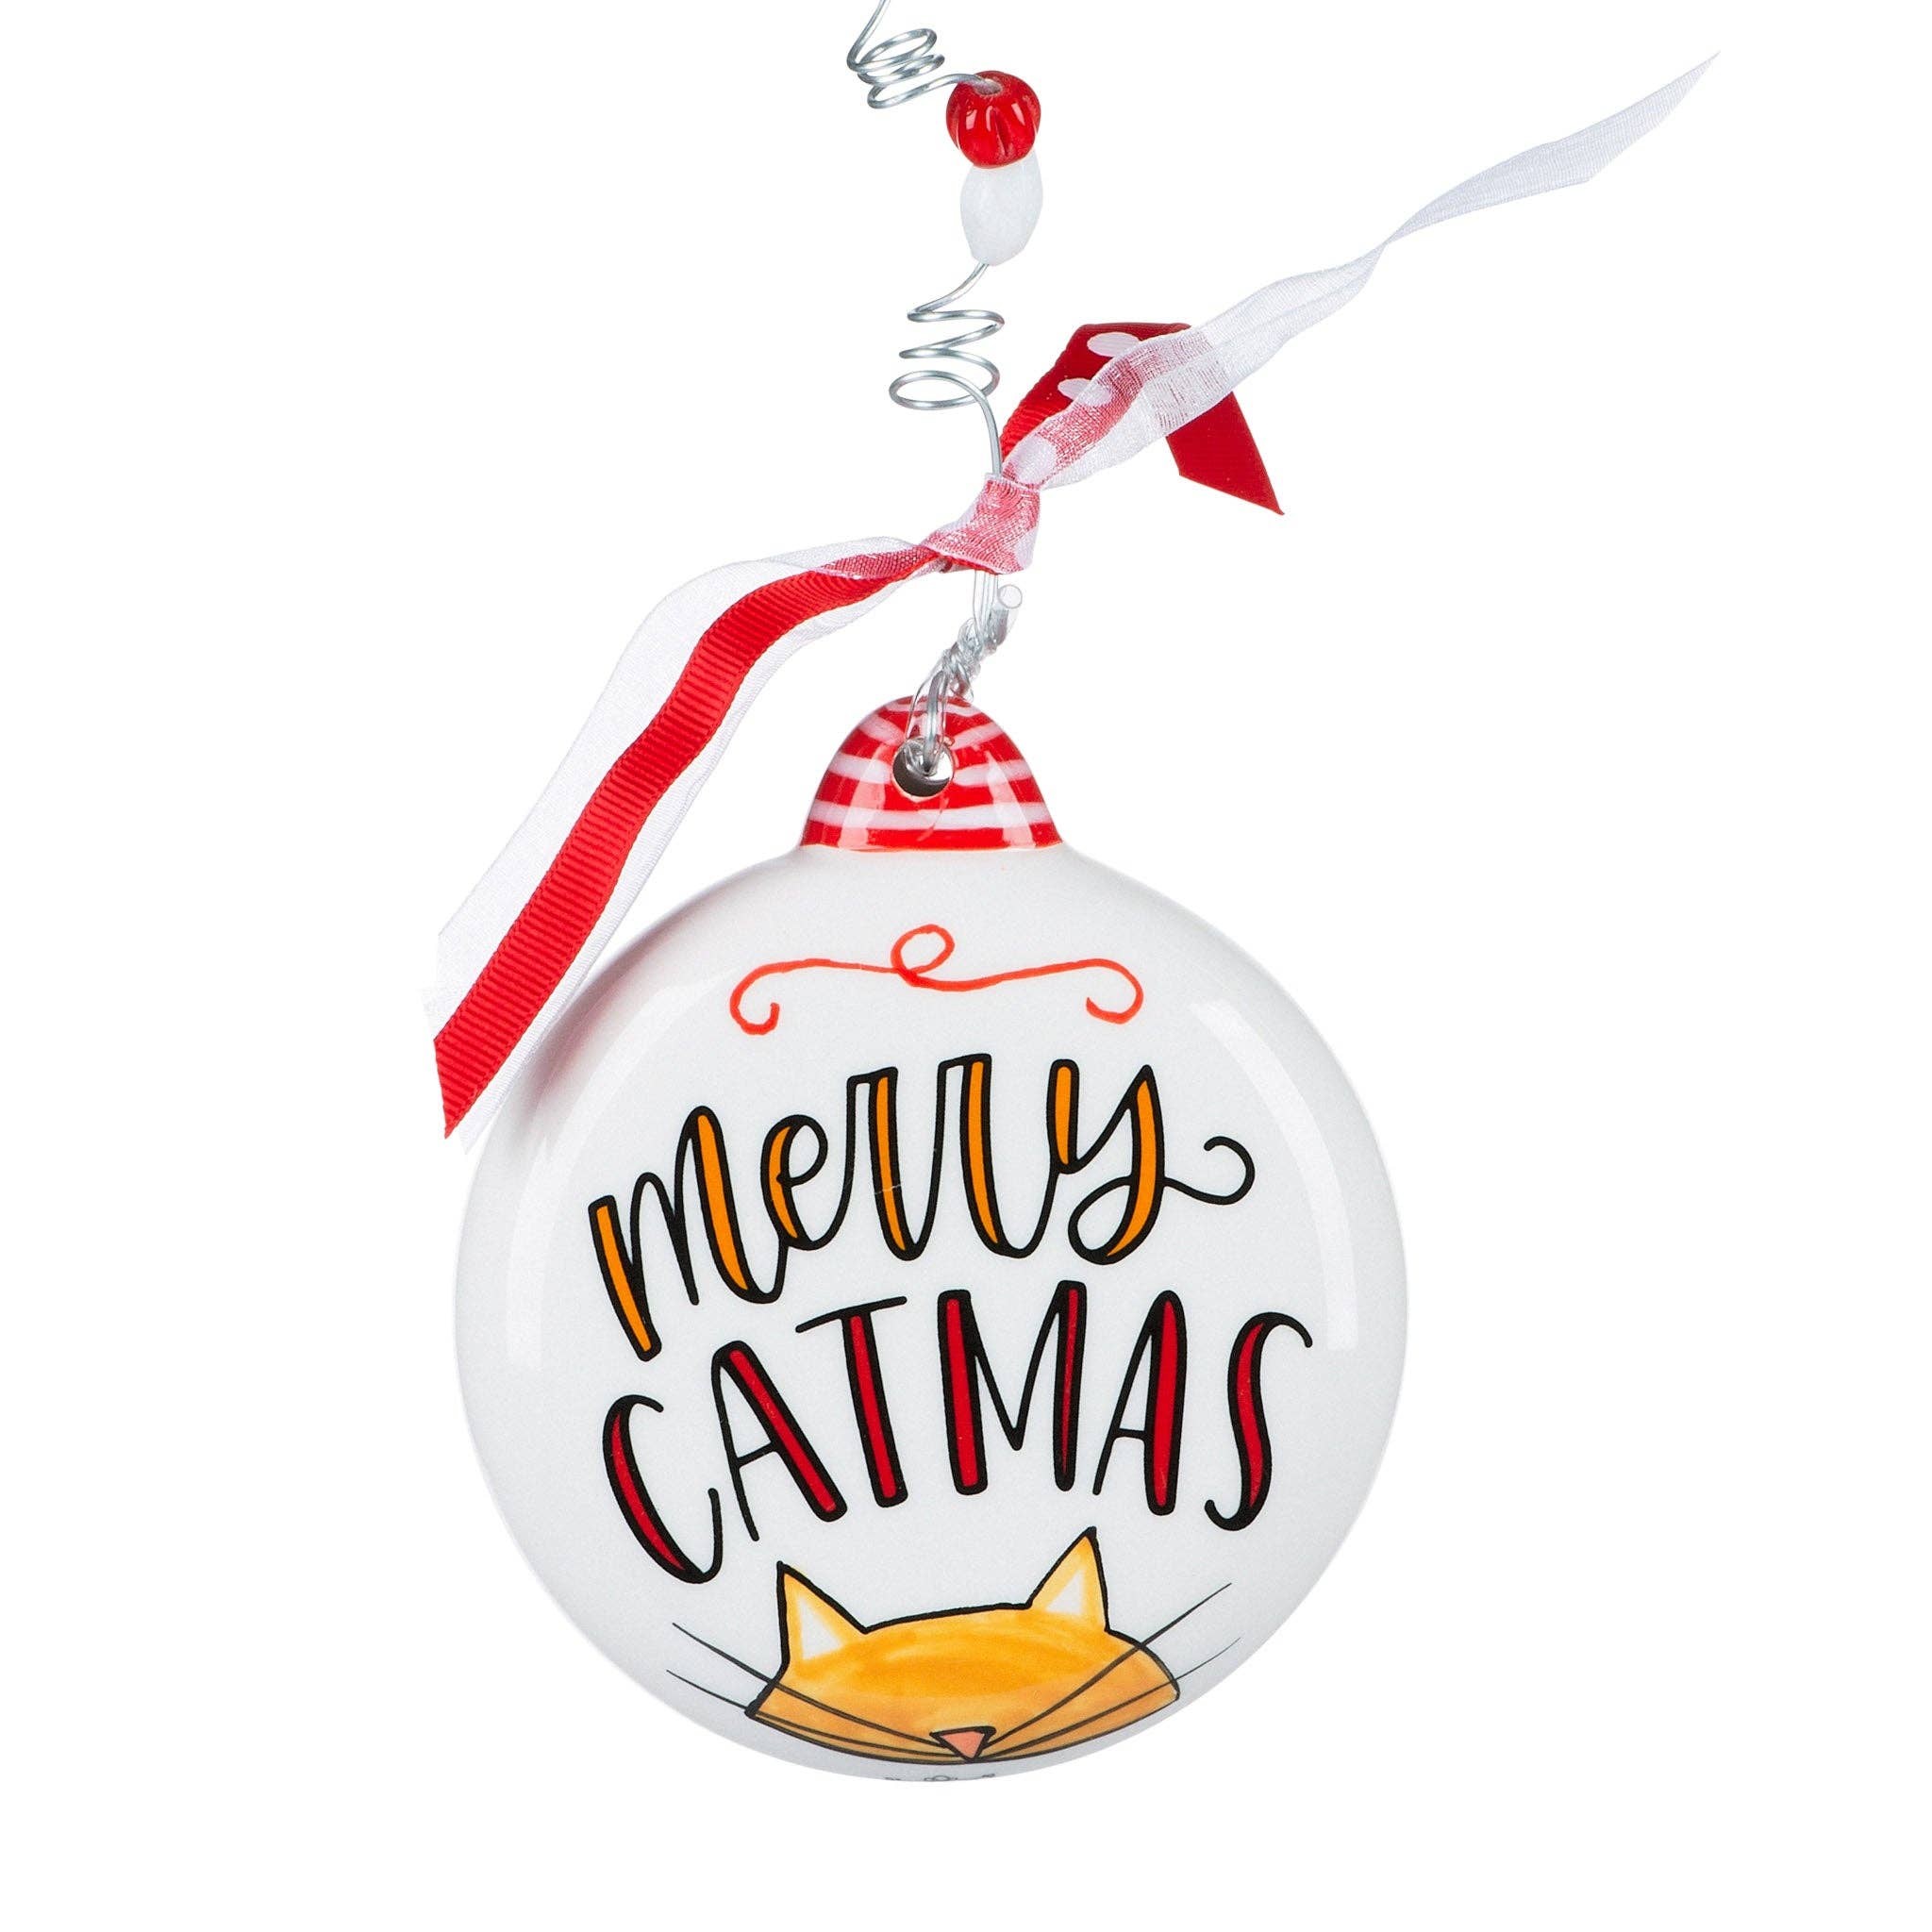 Merry Catmas Puff Ornament - Cat Glass Ornament